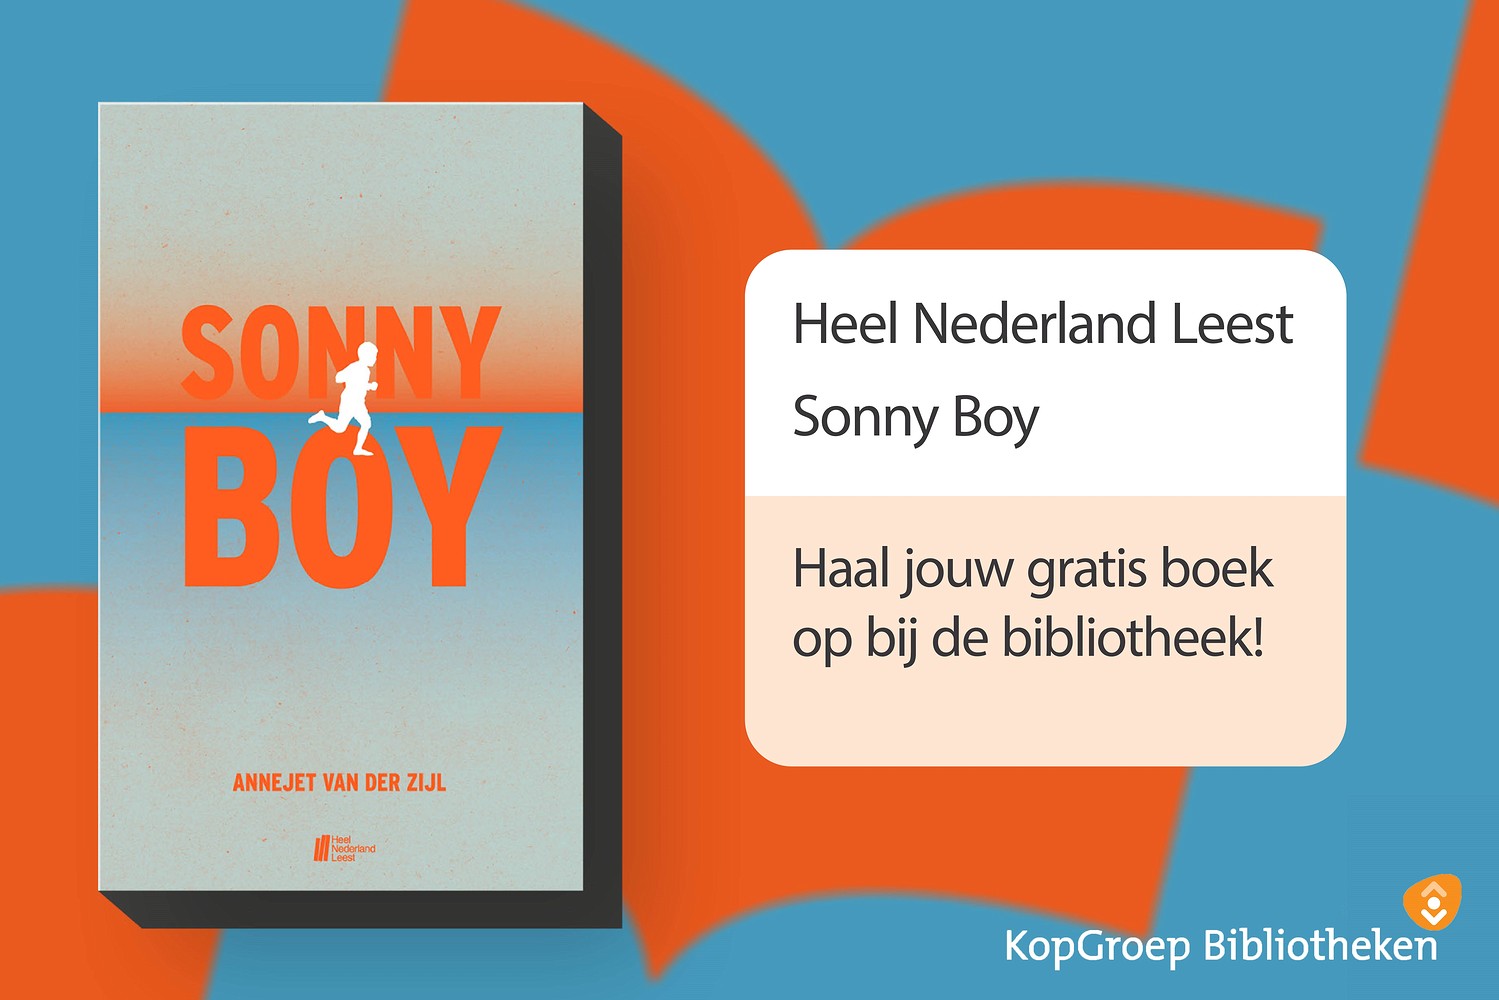 Heel Nederland Leest Sonny Boy BorderMaker